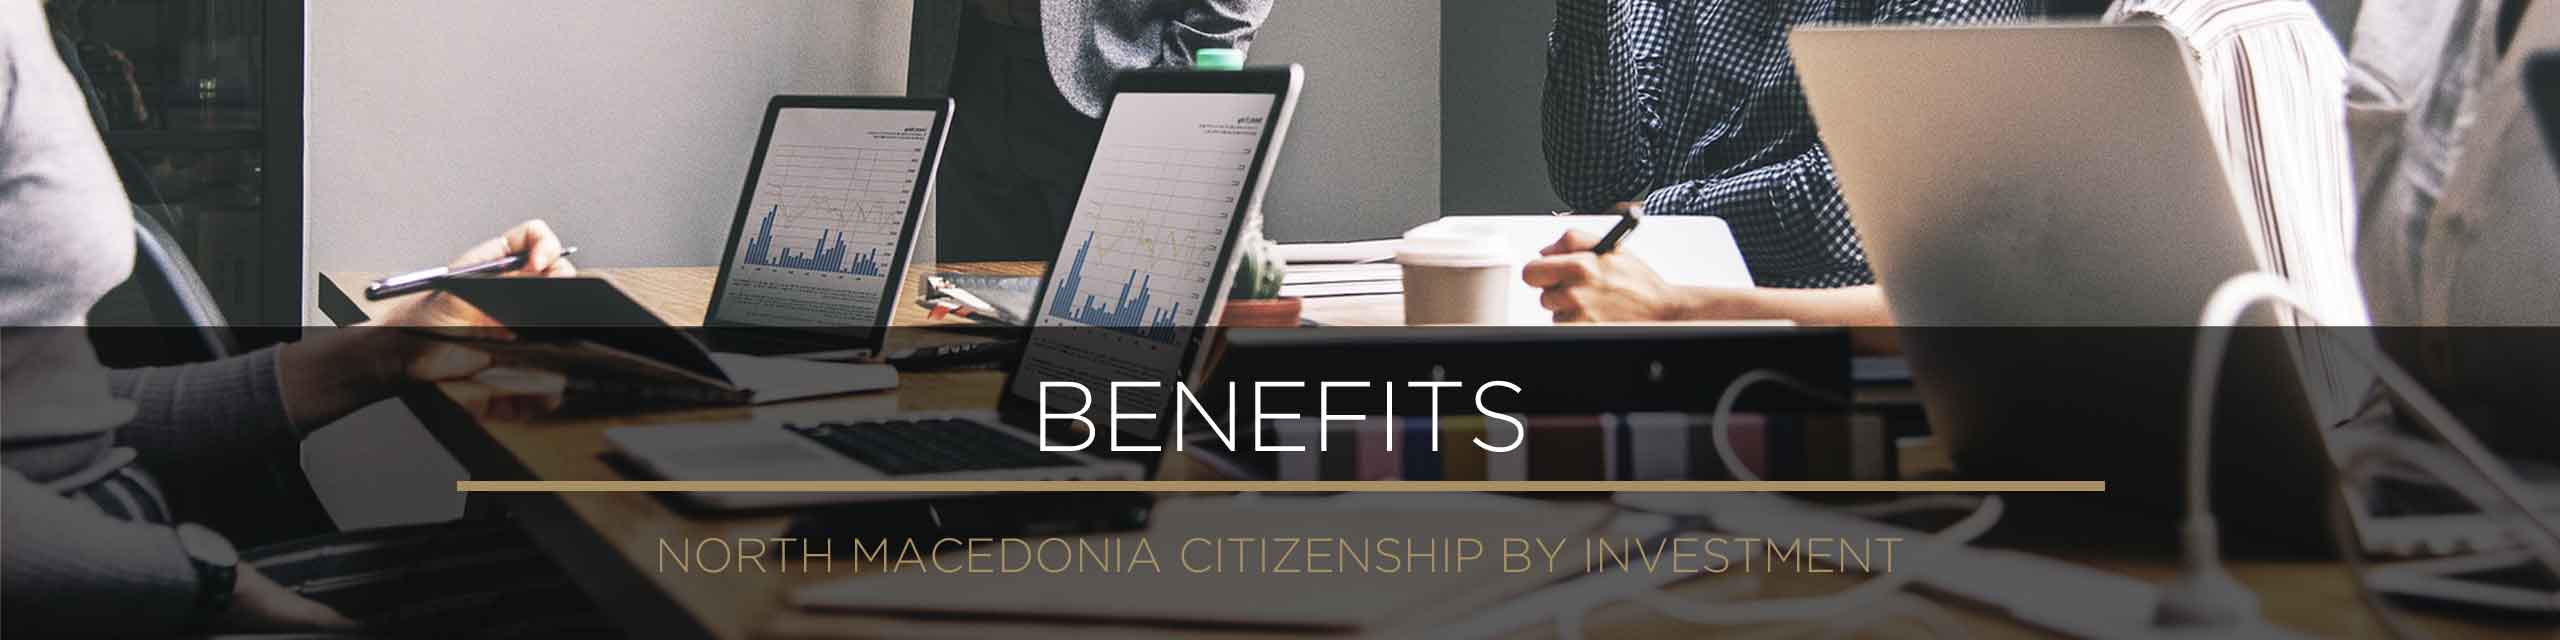 Benefits of North Macedonia Citizenship Program